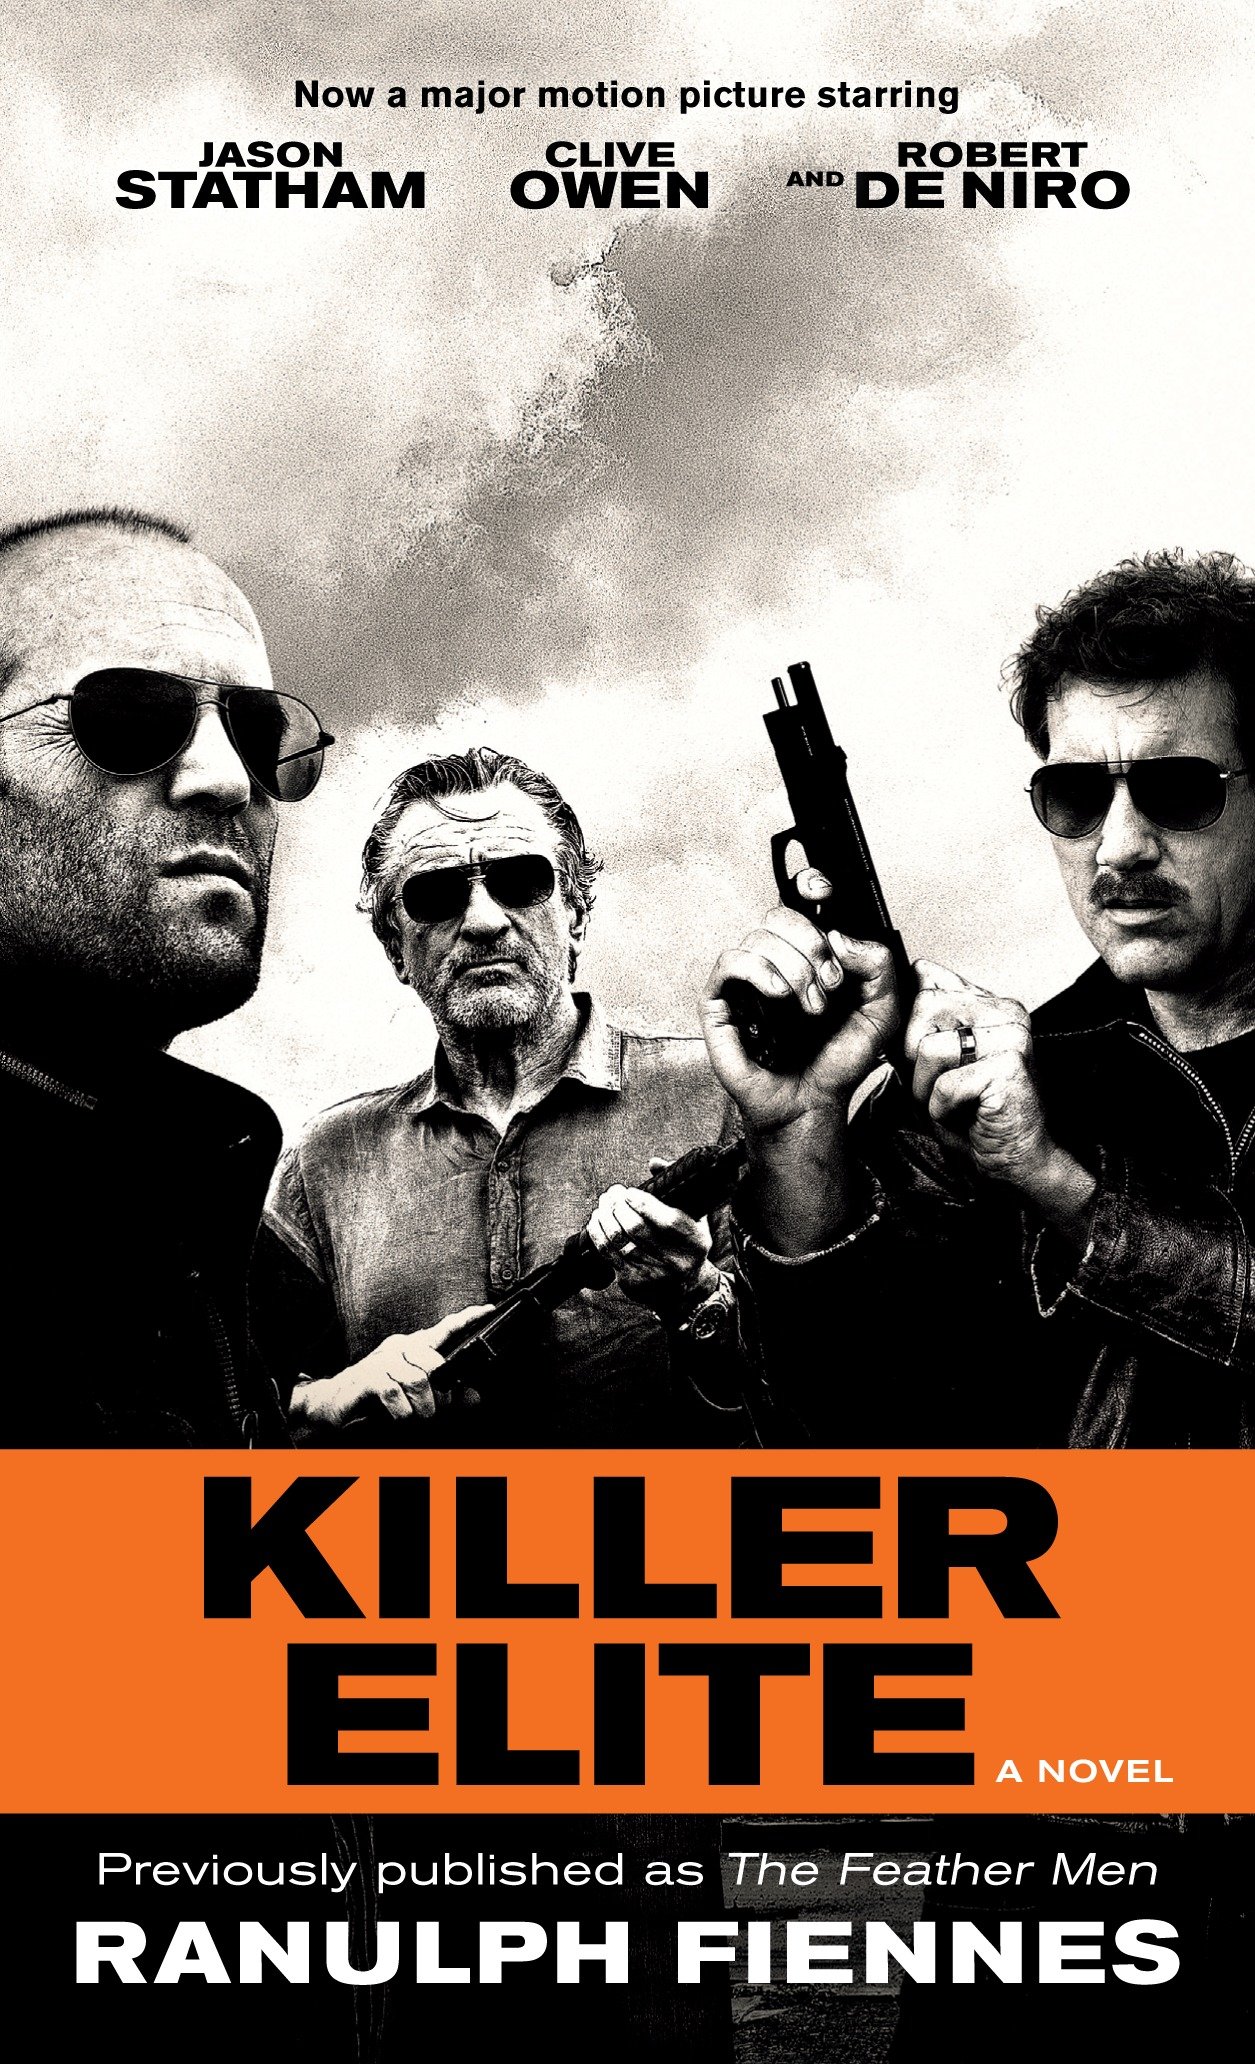 Killer elite cover image